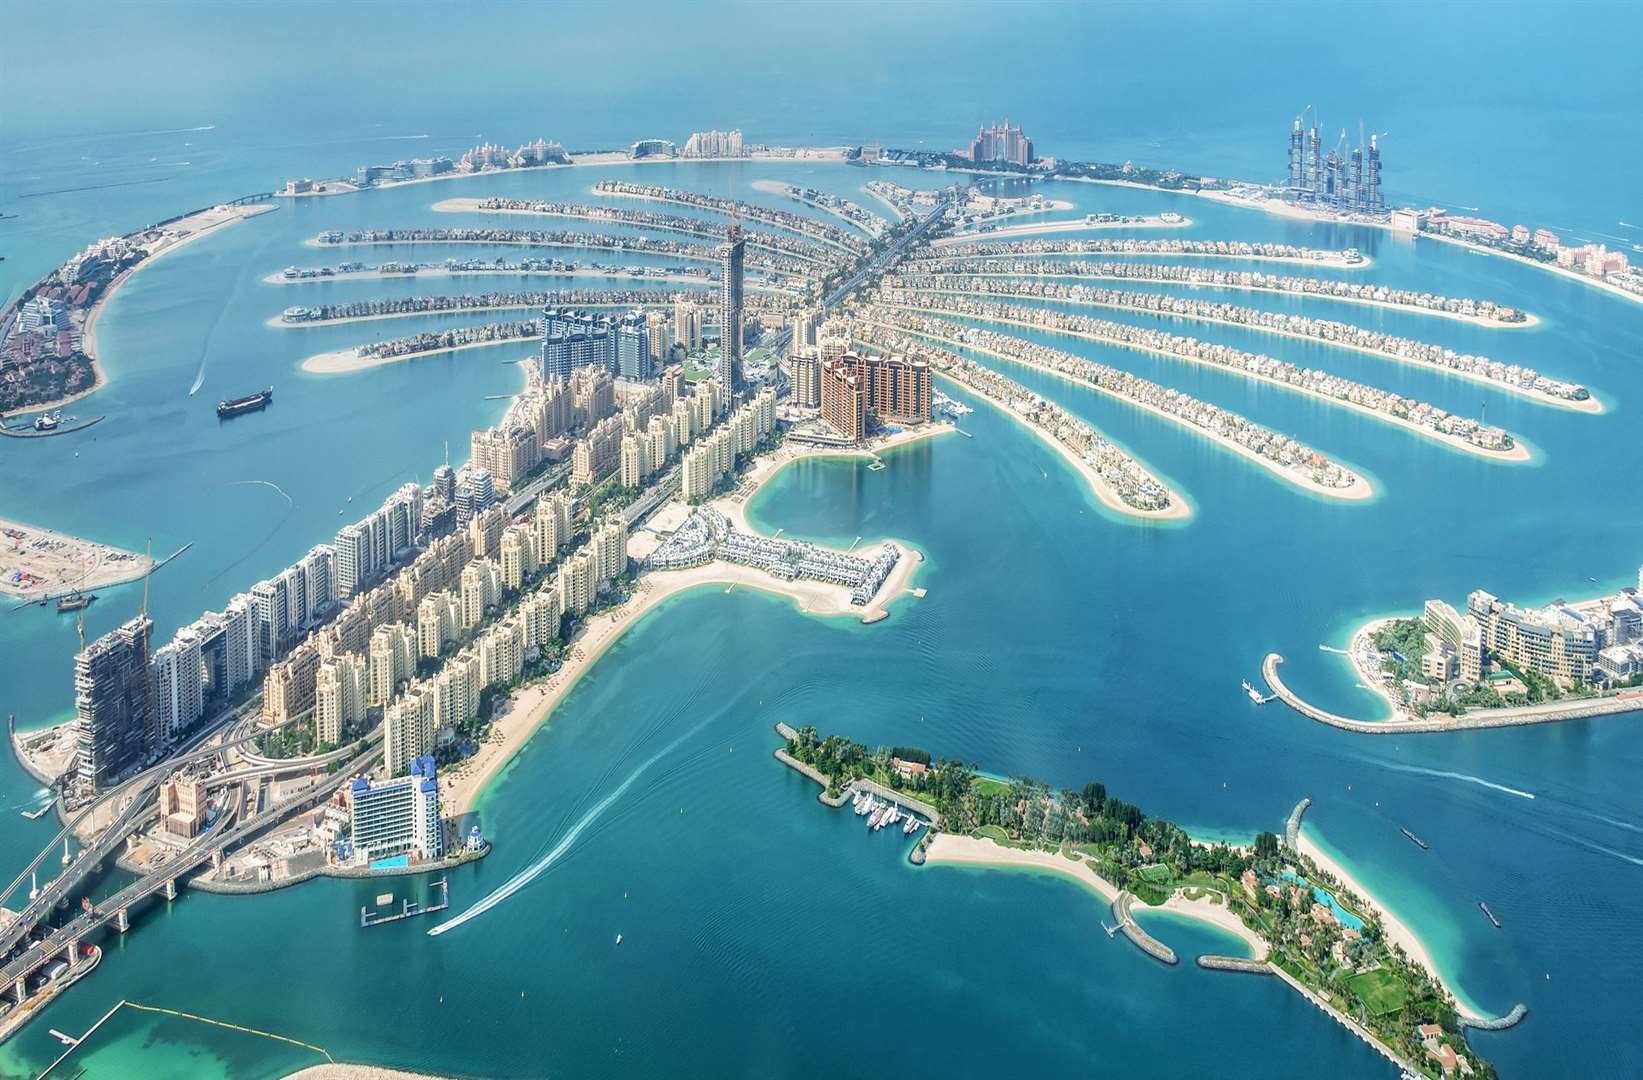 Aerial view of Dubai Palm Jumeirah island, United Arab Emirates. iStock / Delpixart